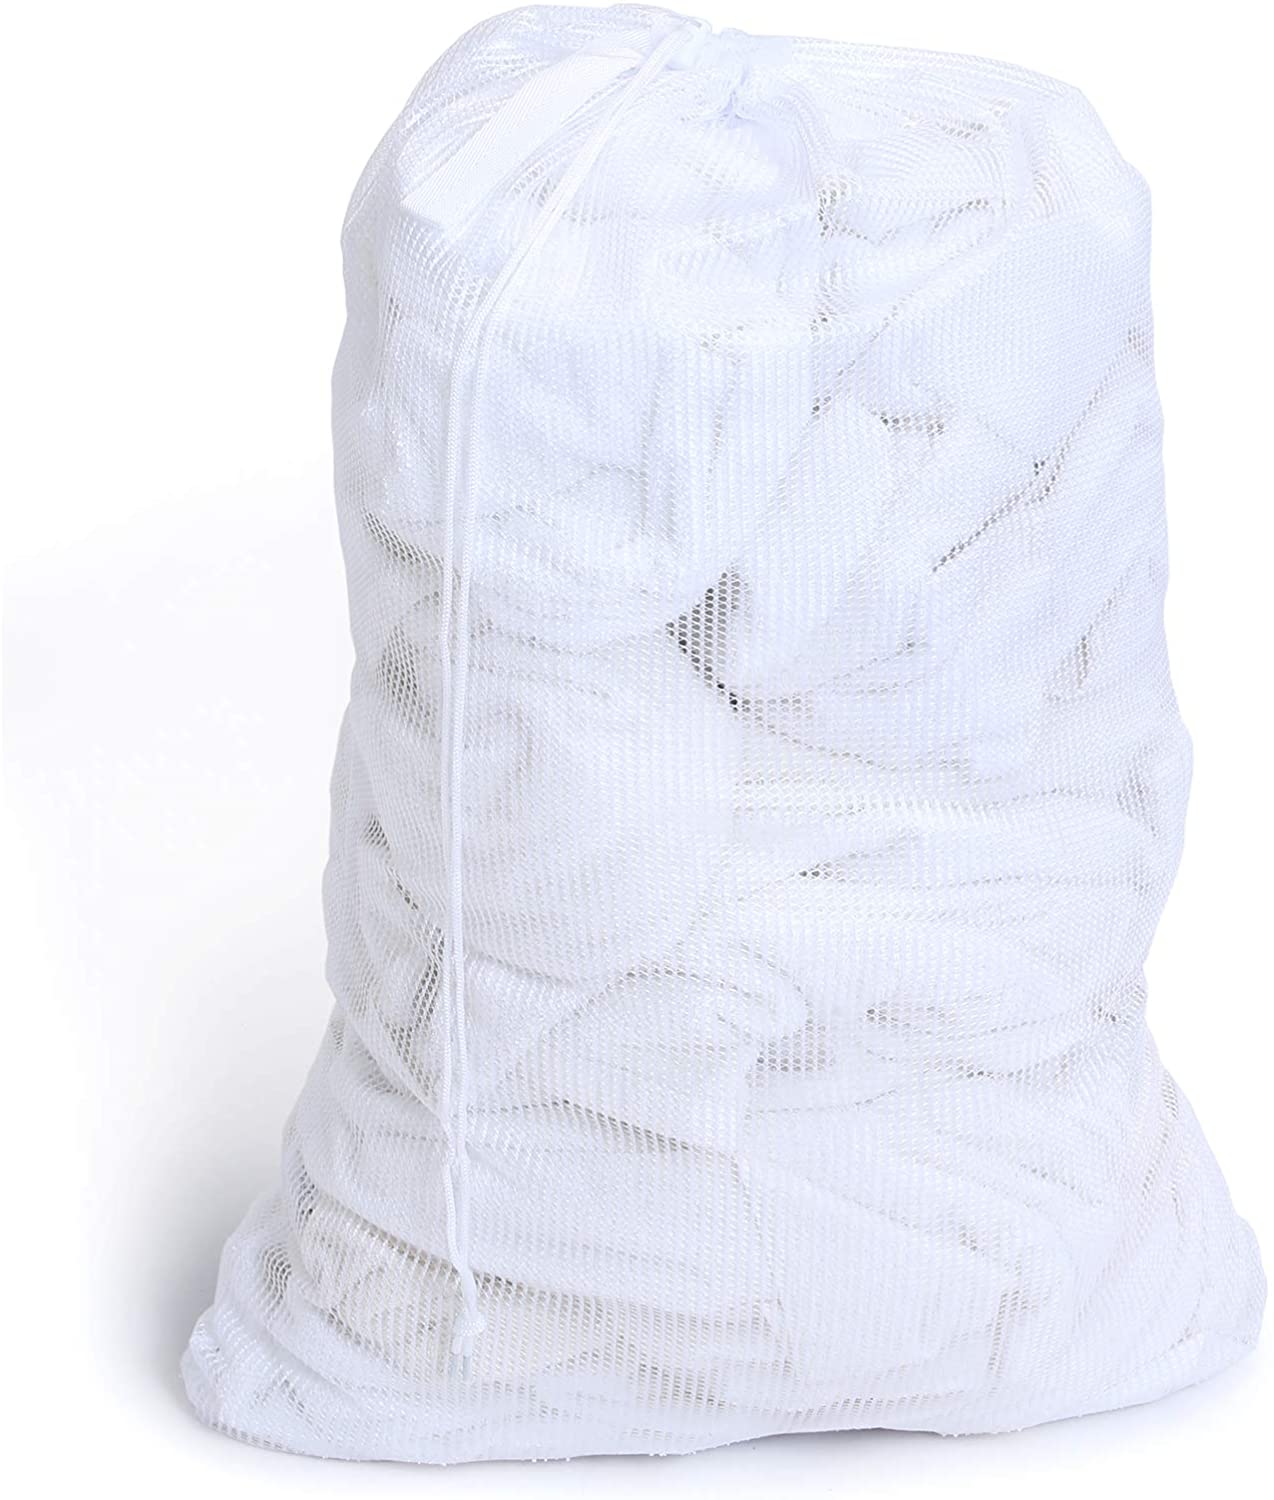 White Mesh Laundry Bag with Drawstring